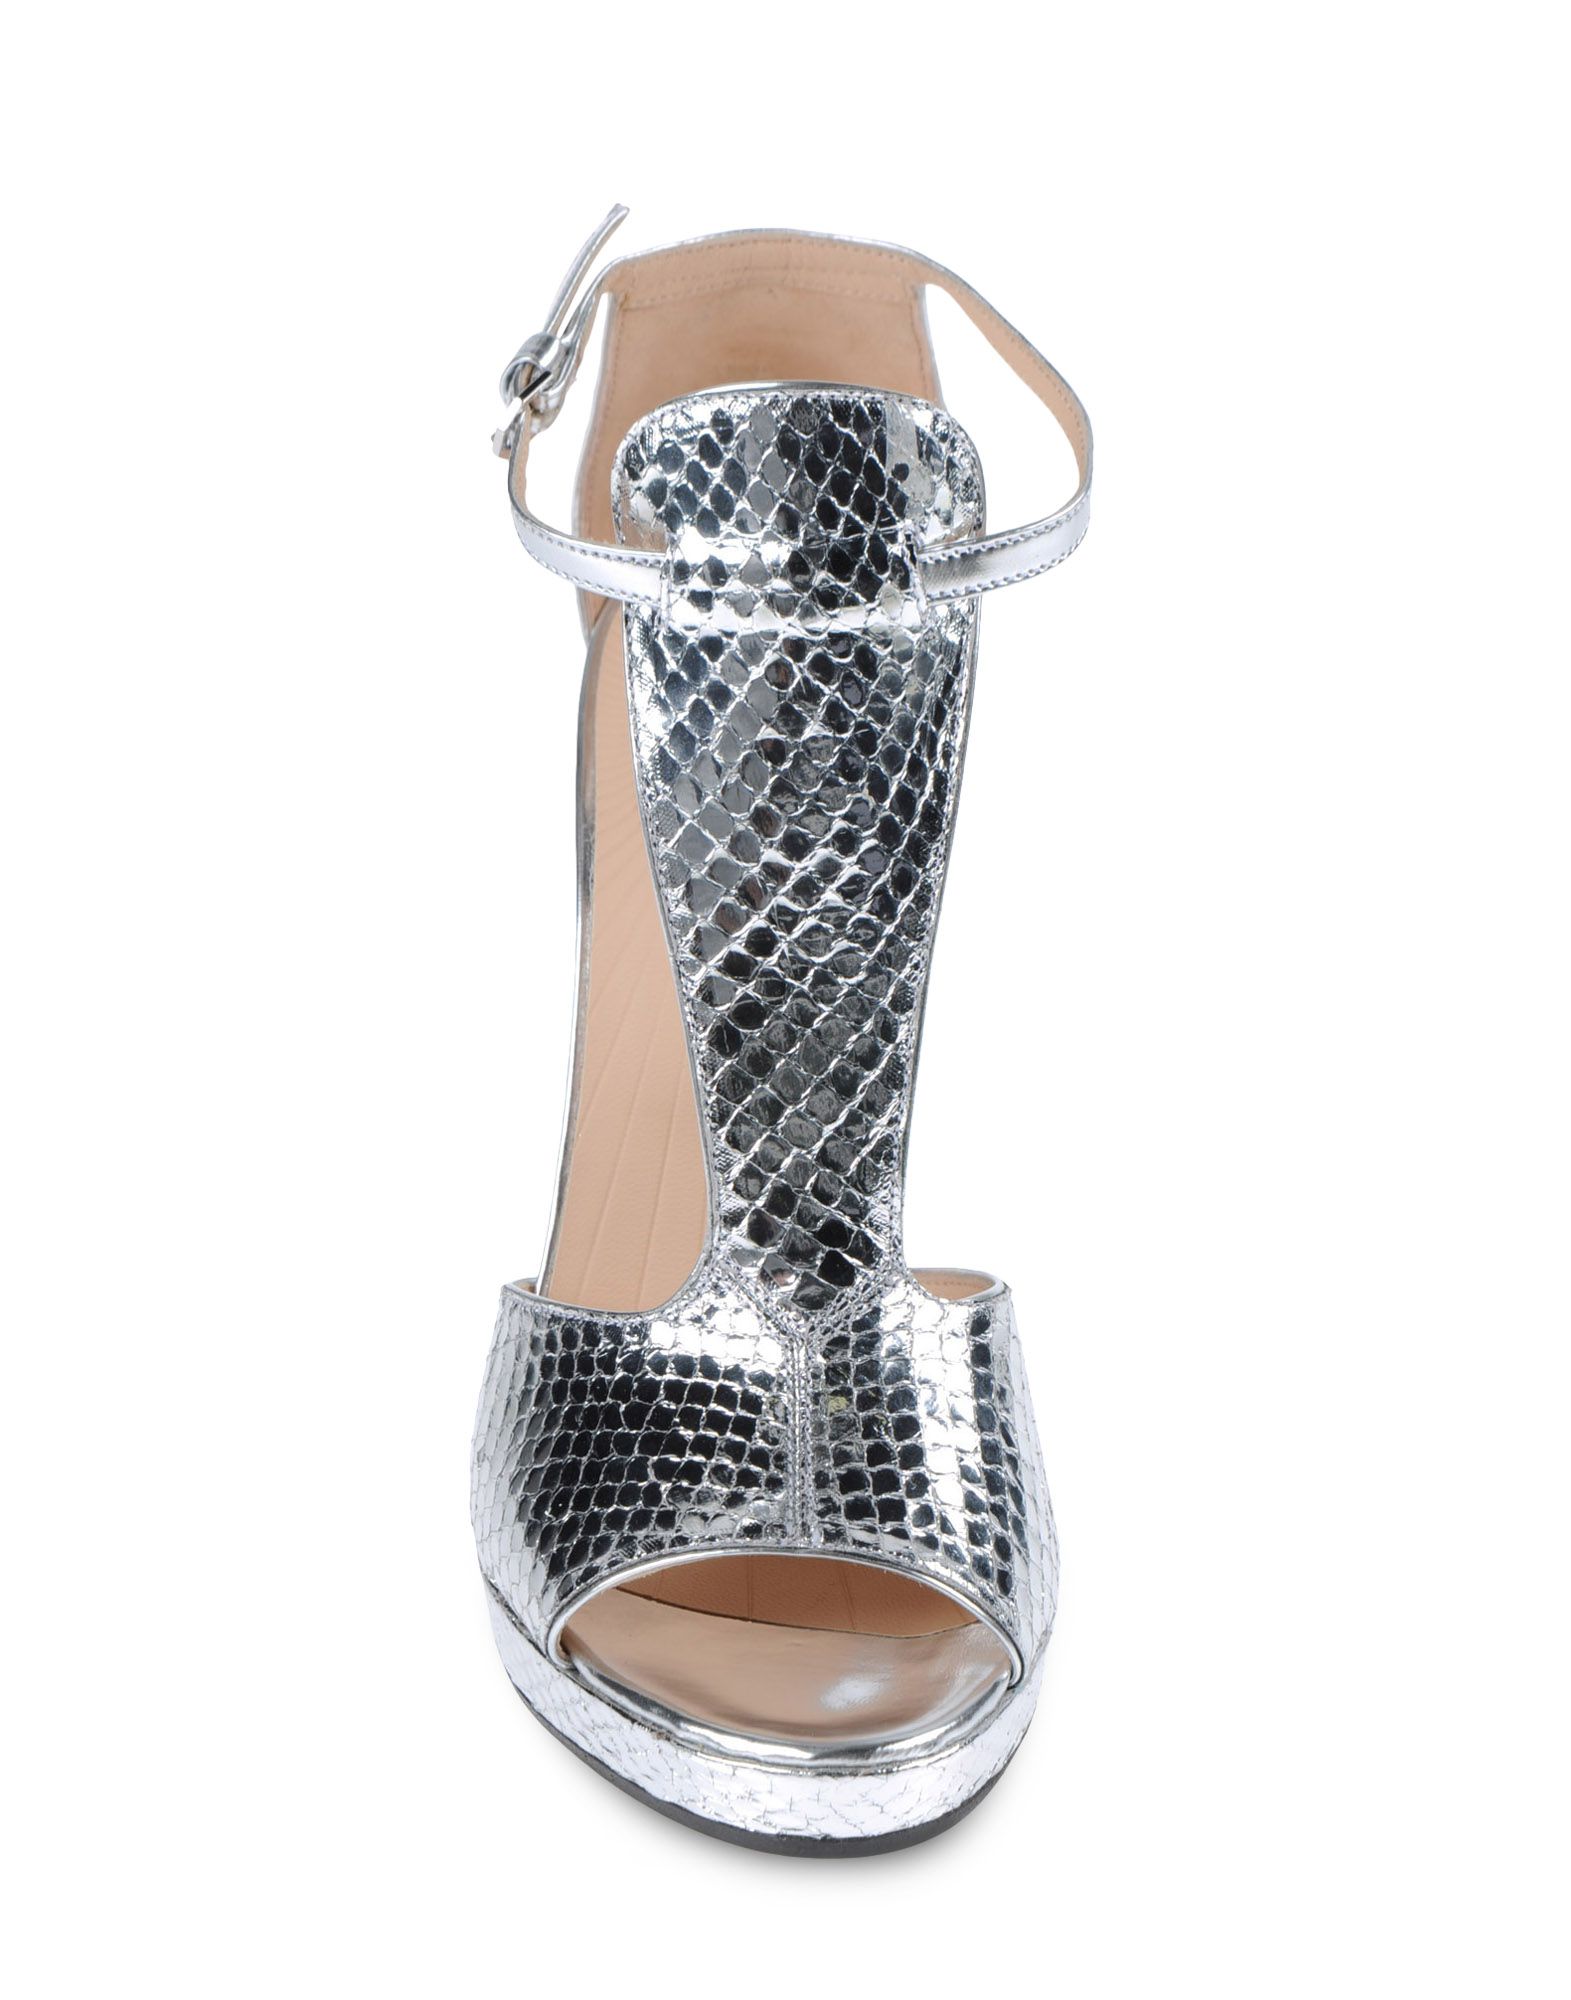 Viktor & rolf Platform Sandals in Silver | Lyst